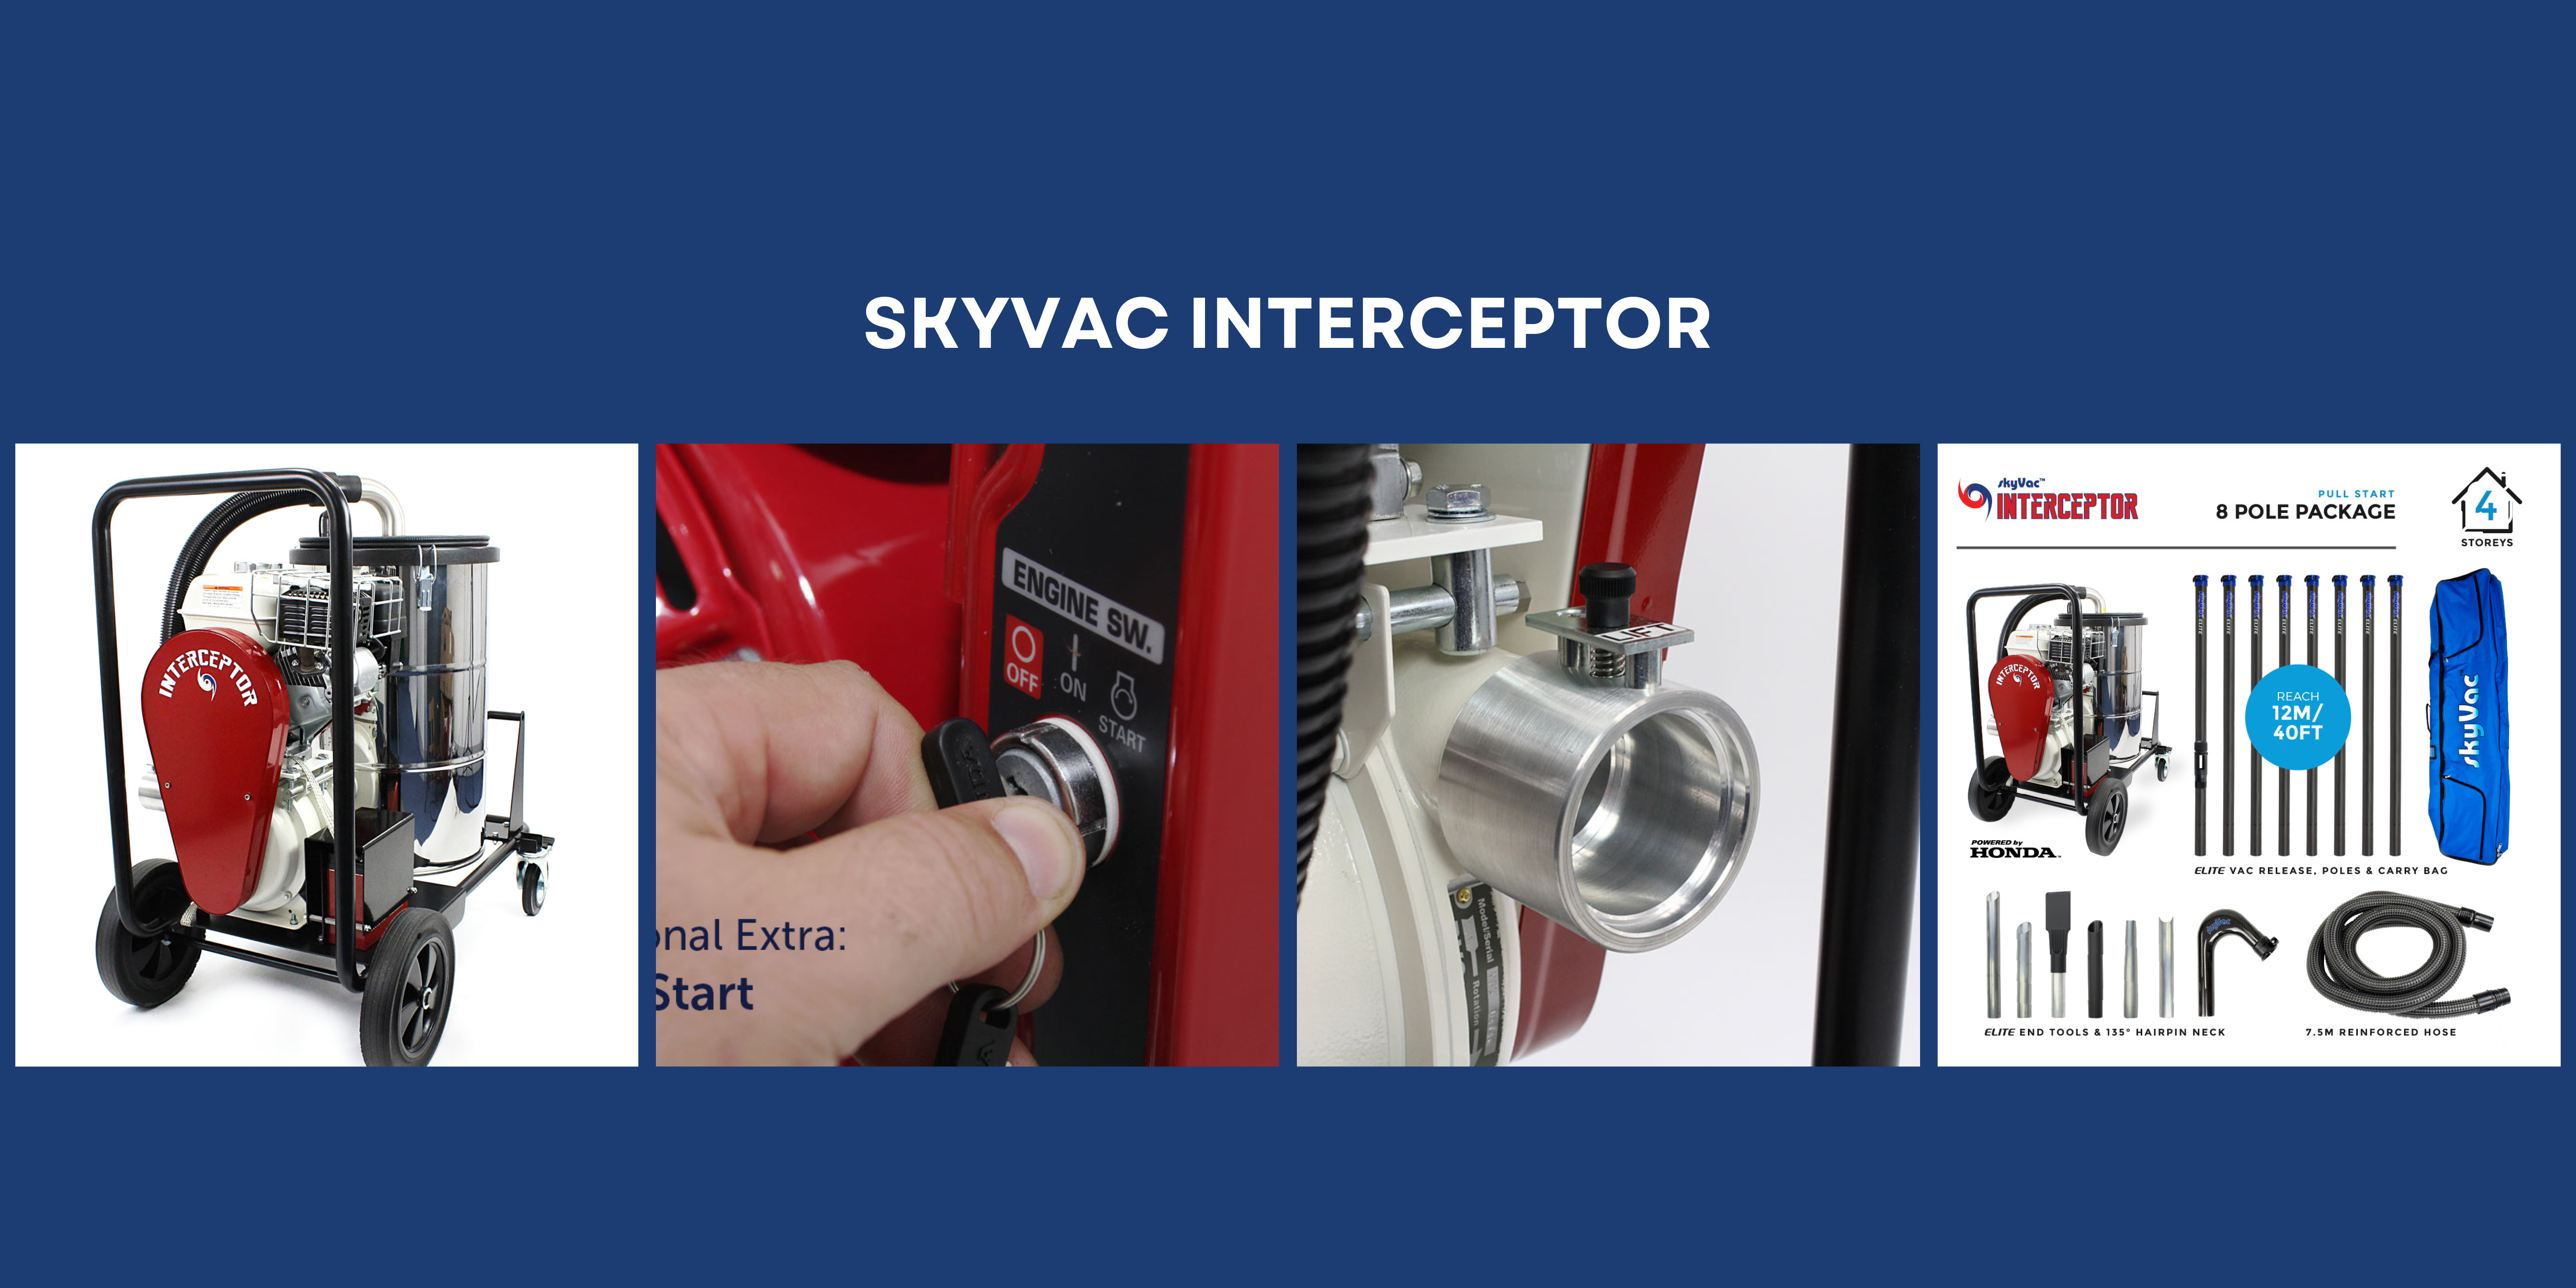 Skyvac interceptor